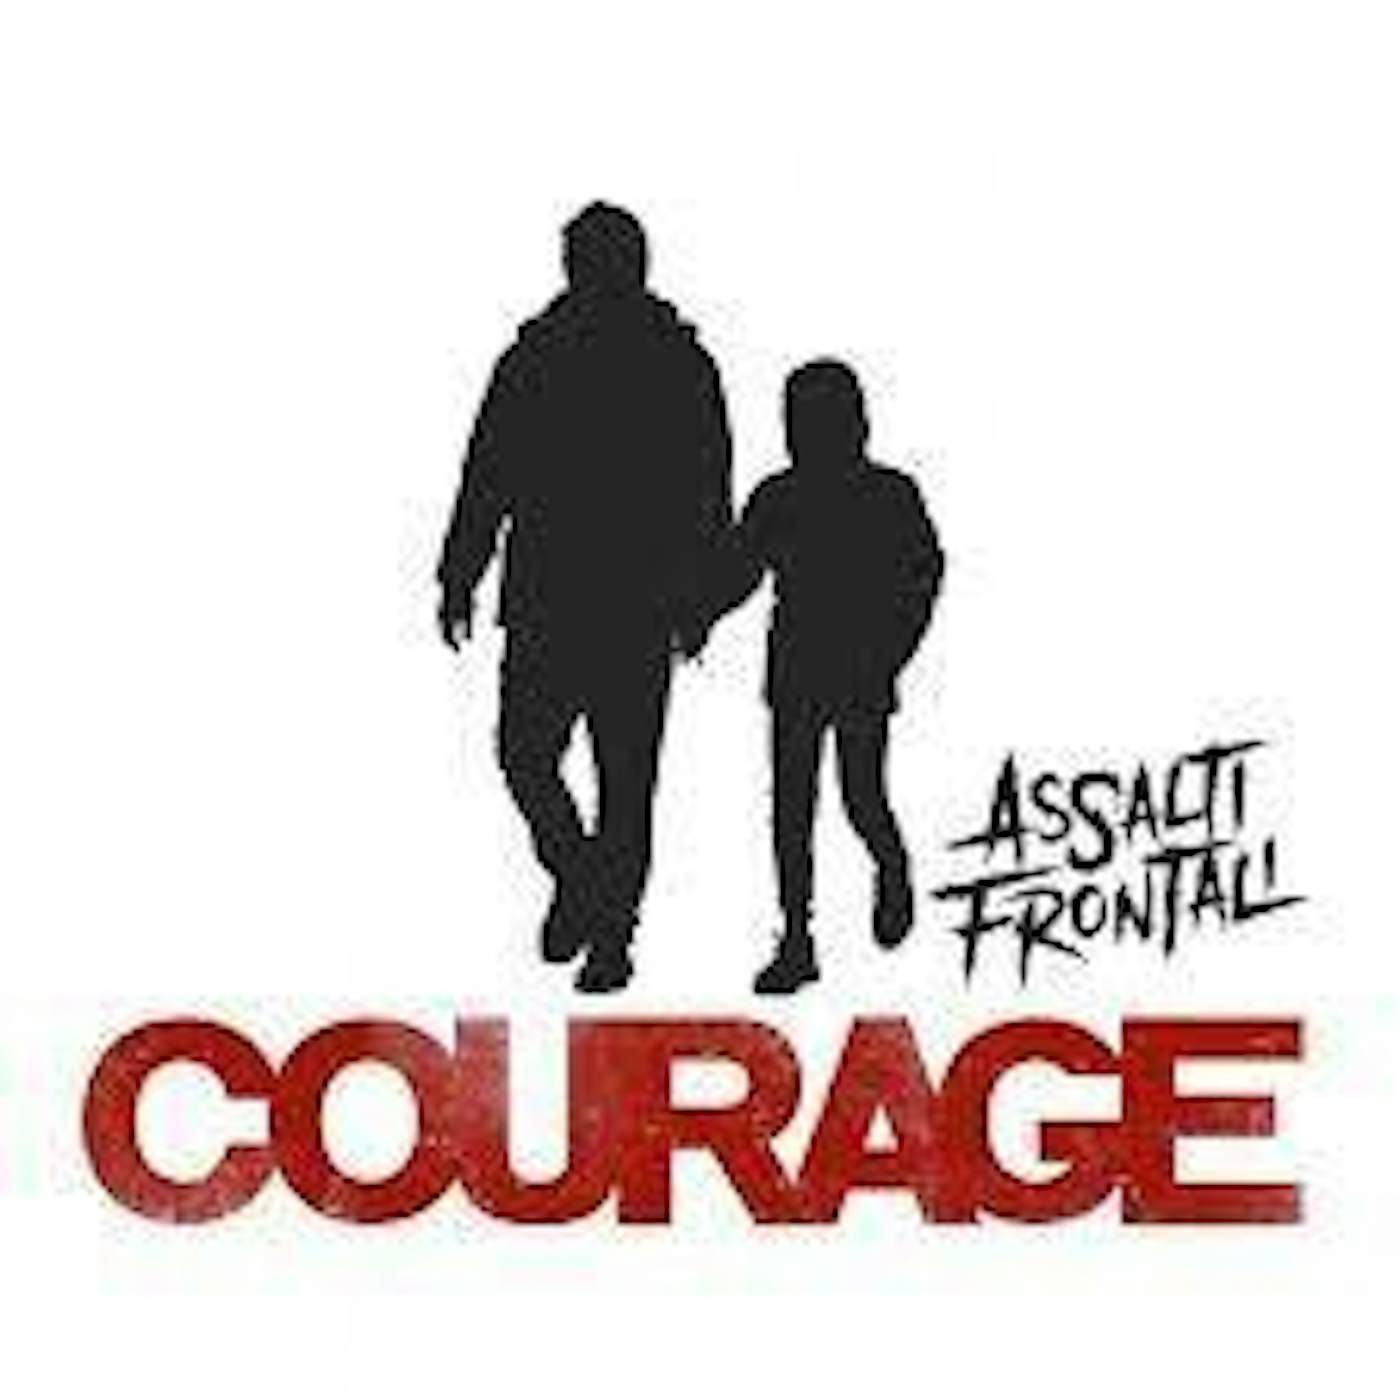 Assalti Frontali Courage Vinyl Record